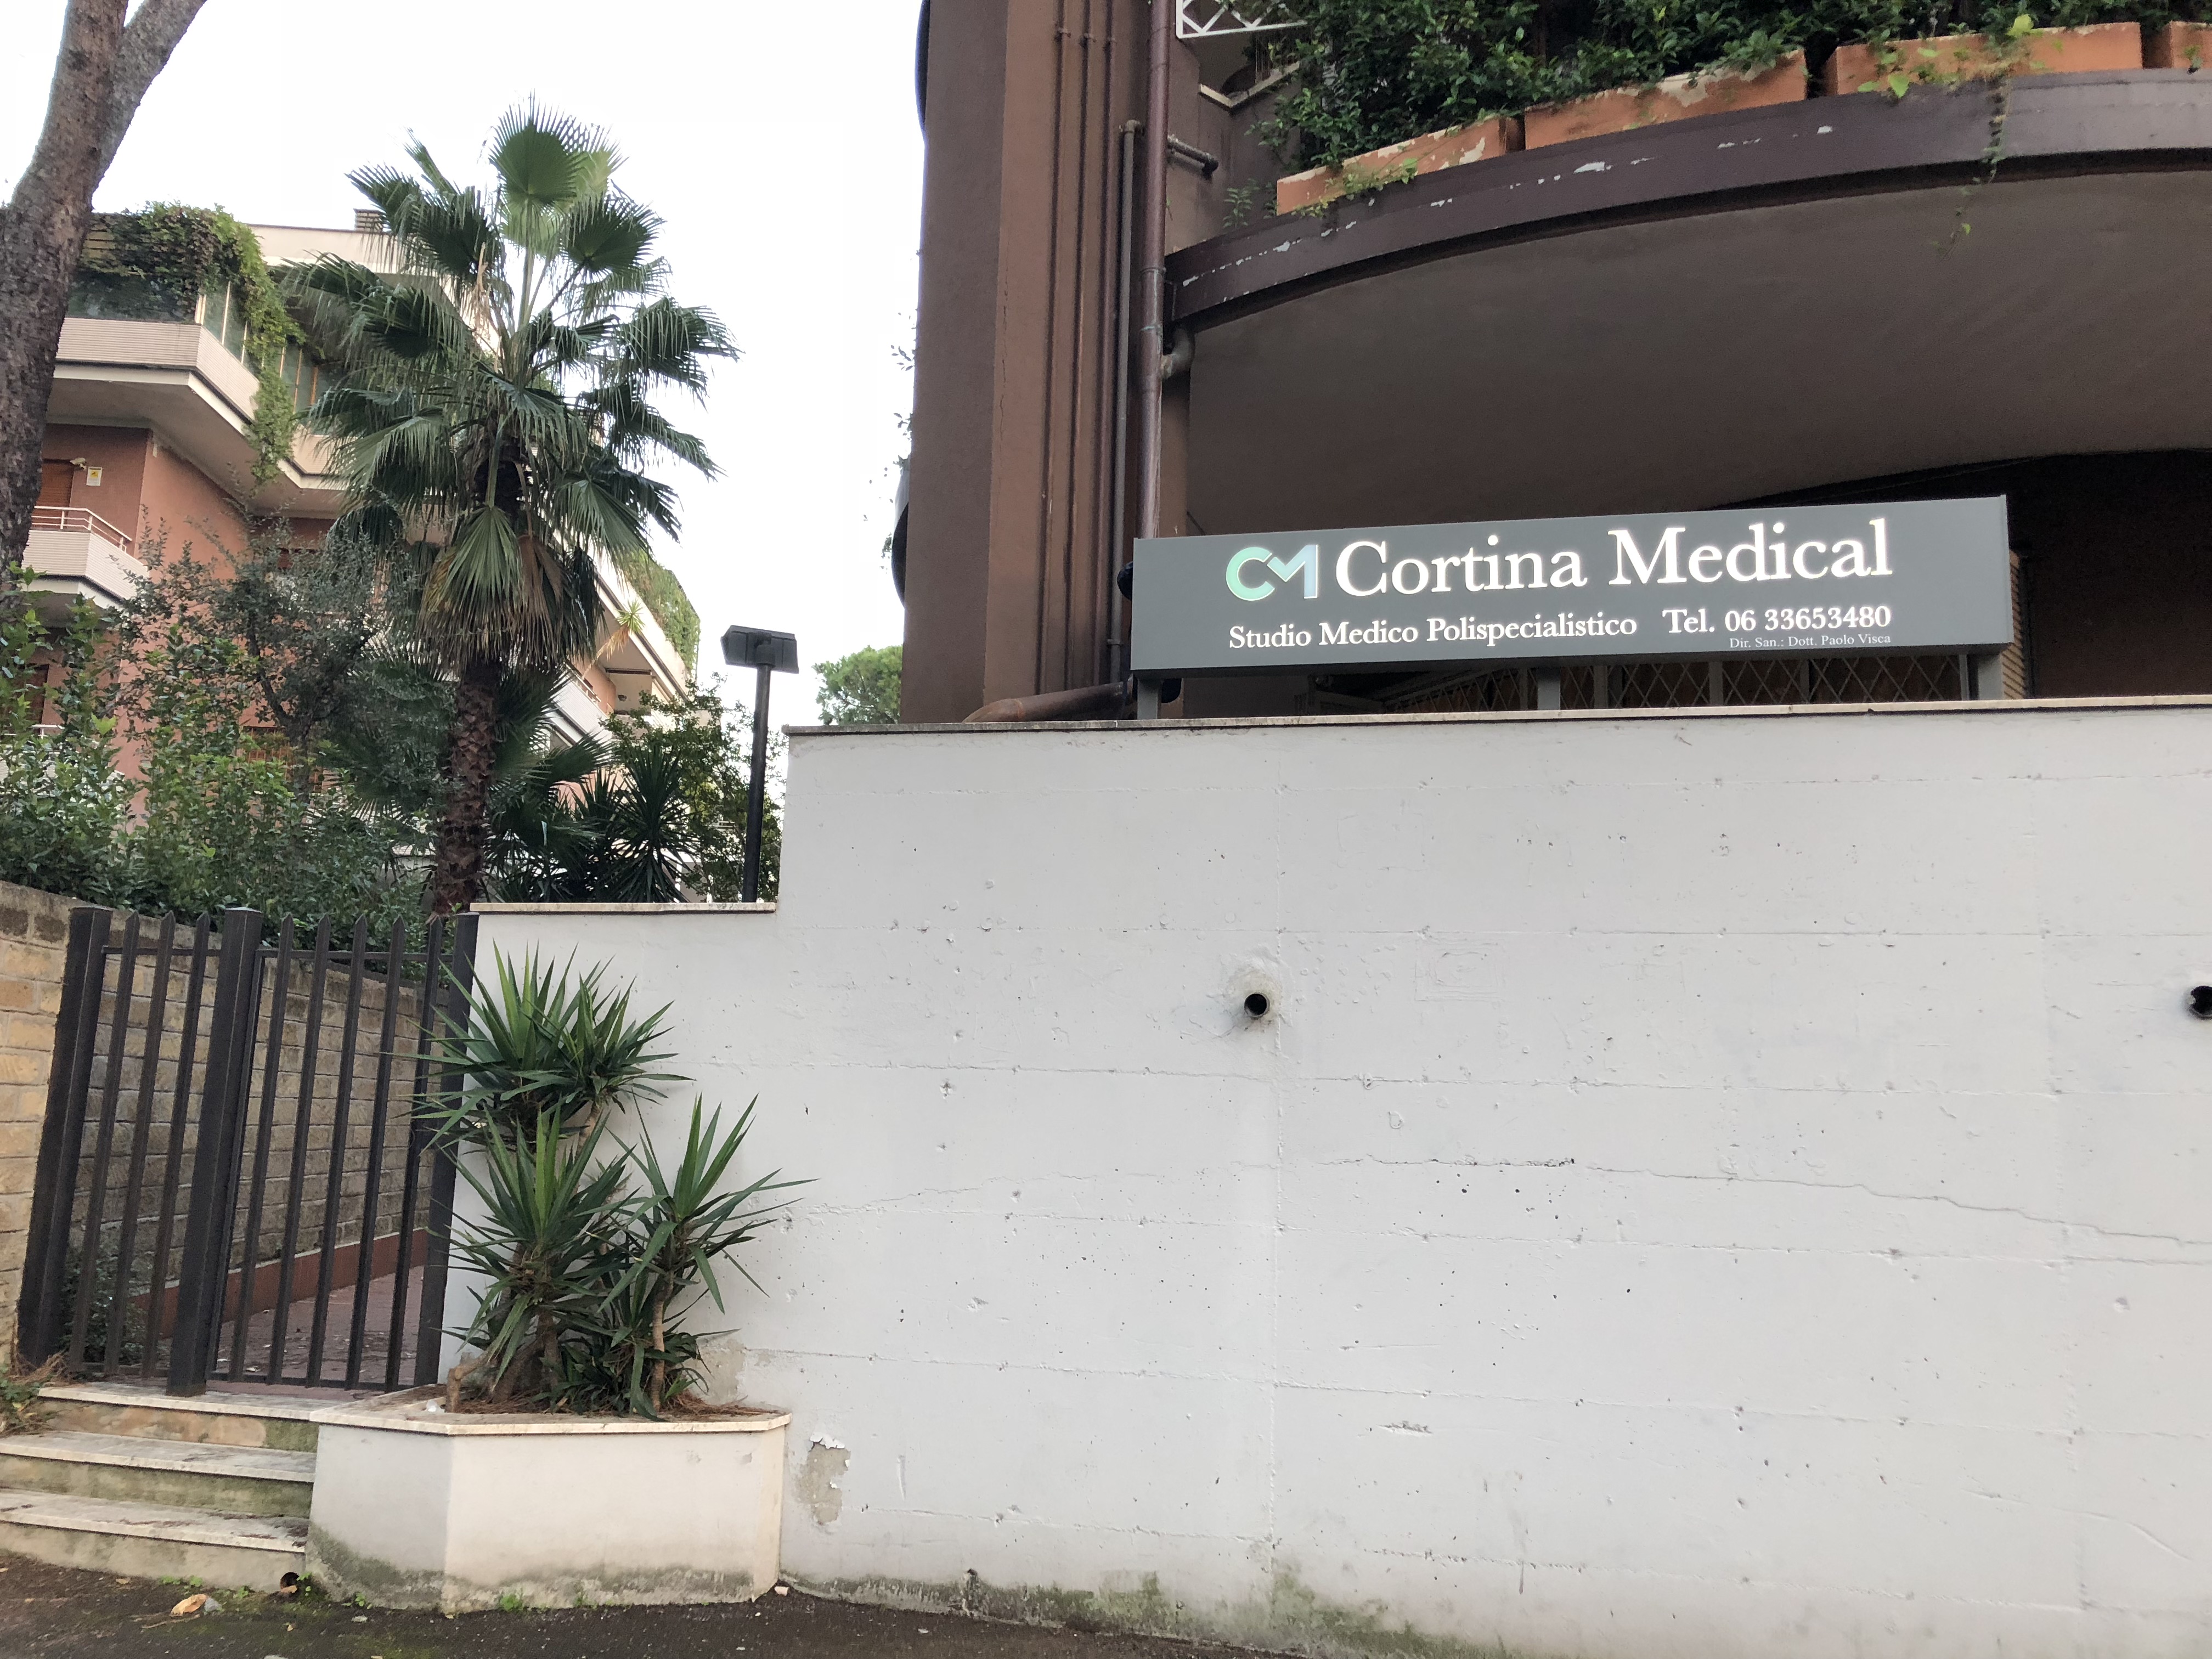 Cortina Medical Center